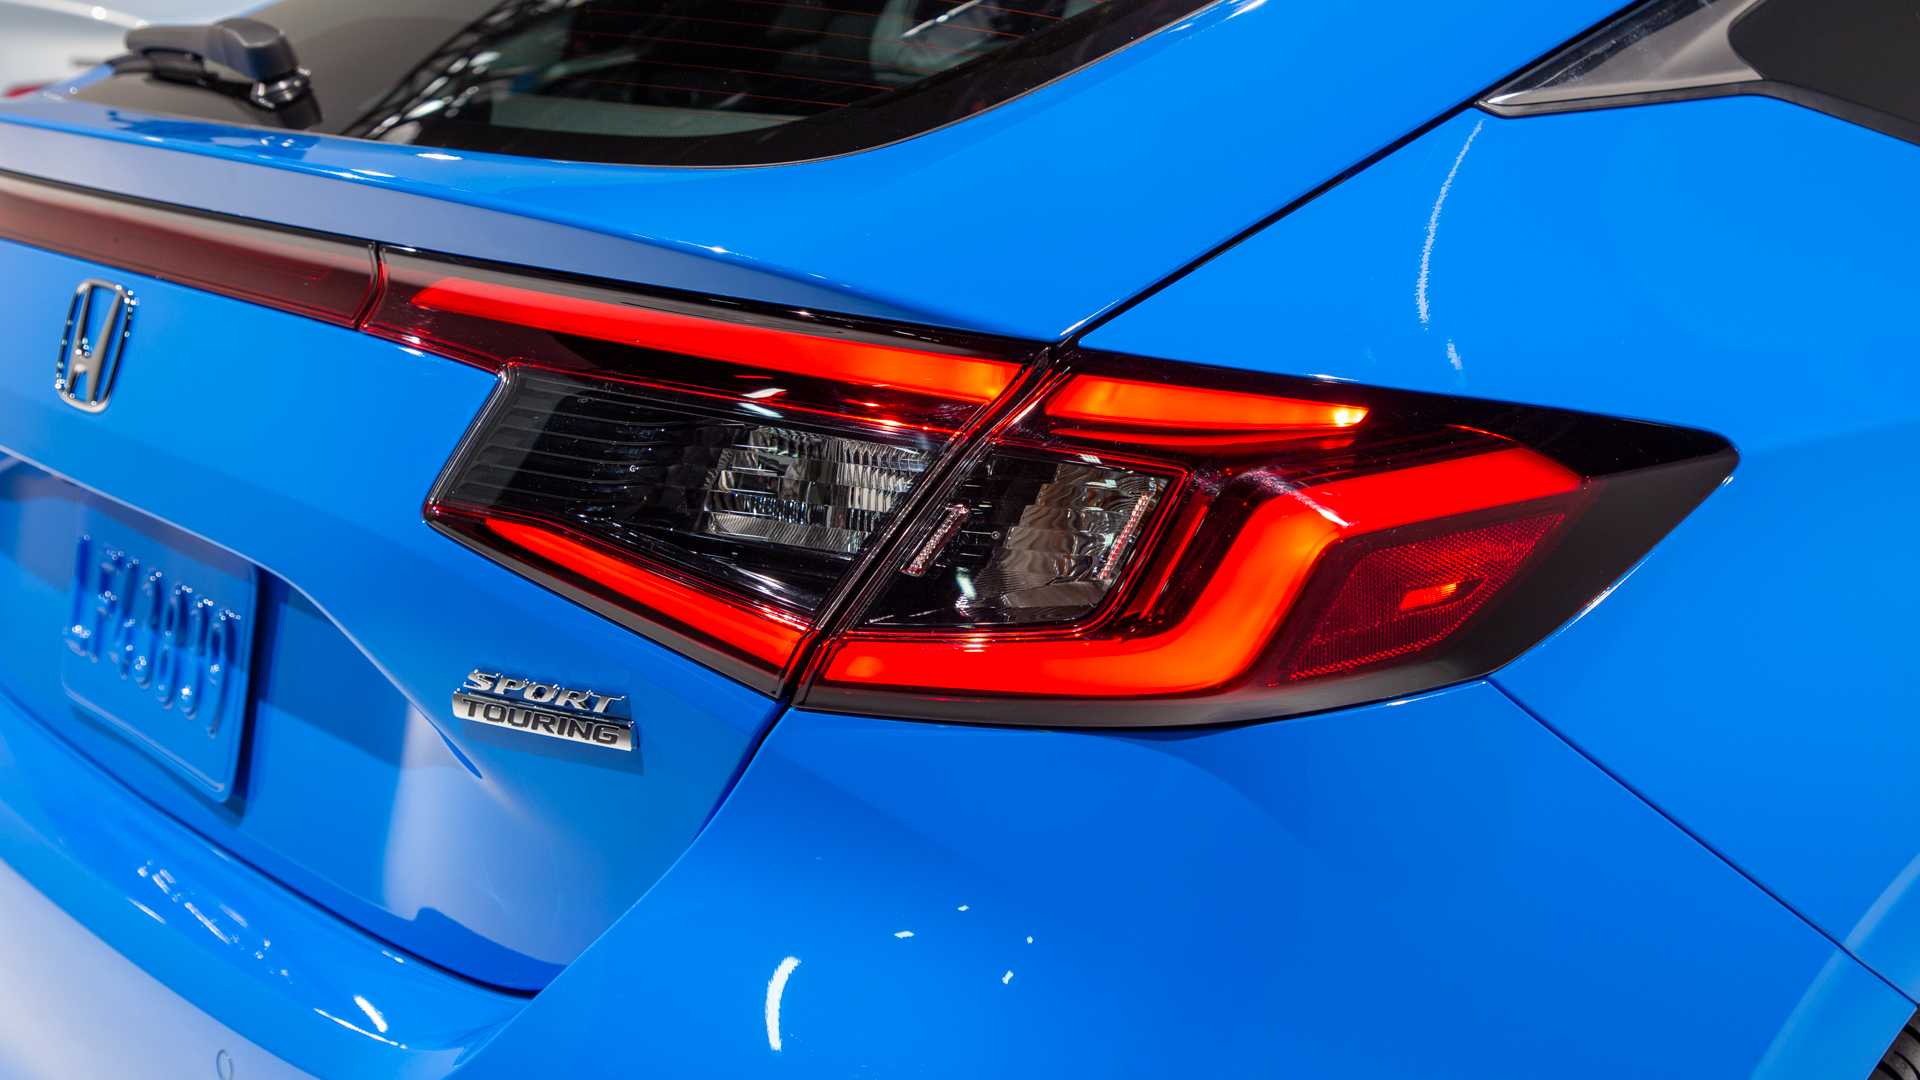 2022 Honda Civic Sedan Interior Review: The Civic Goes Understated